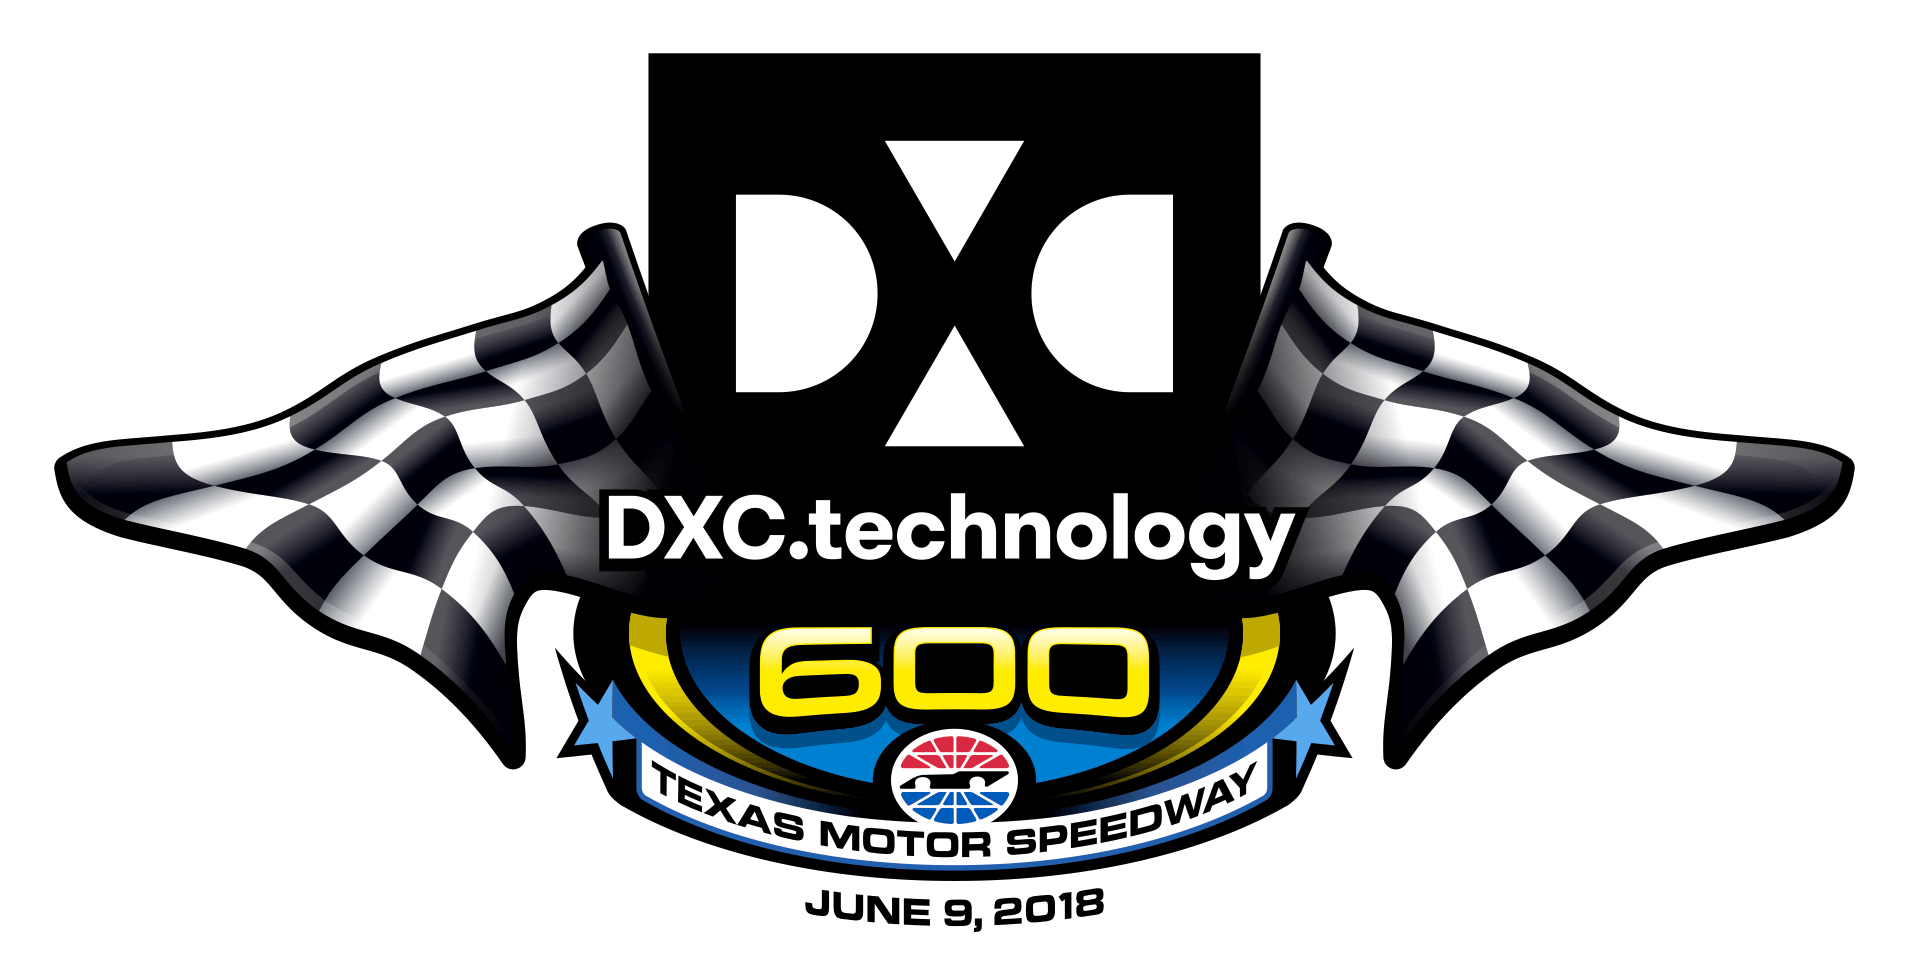 Dxc Technology Logo - DXC Technology 600 - IndyCar Racing Series